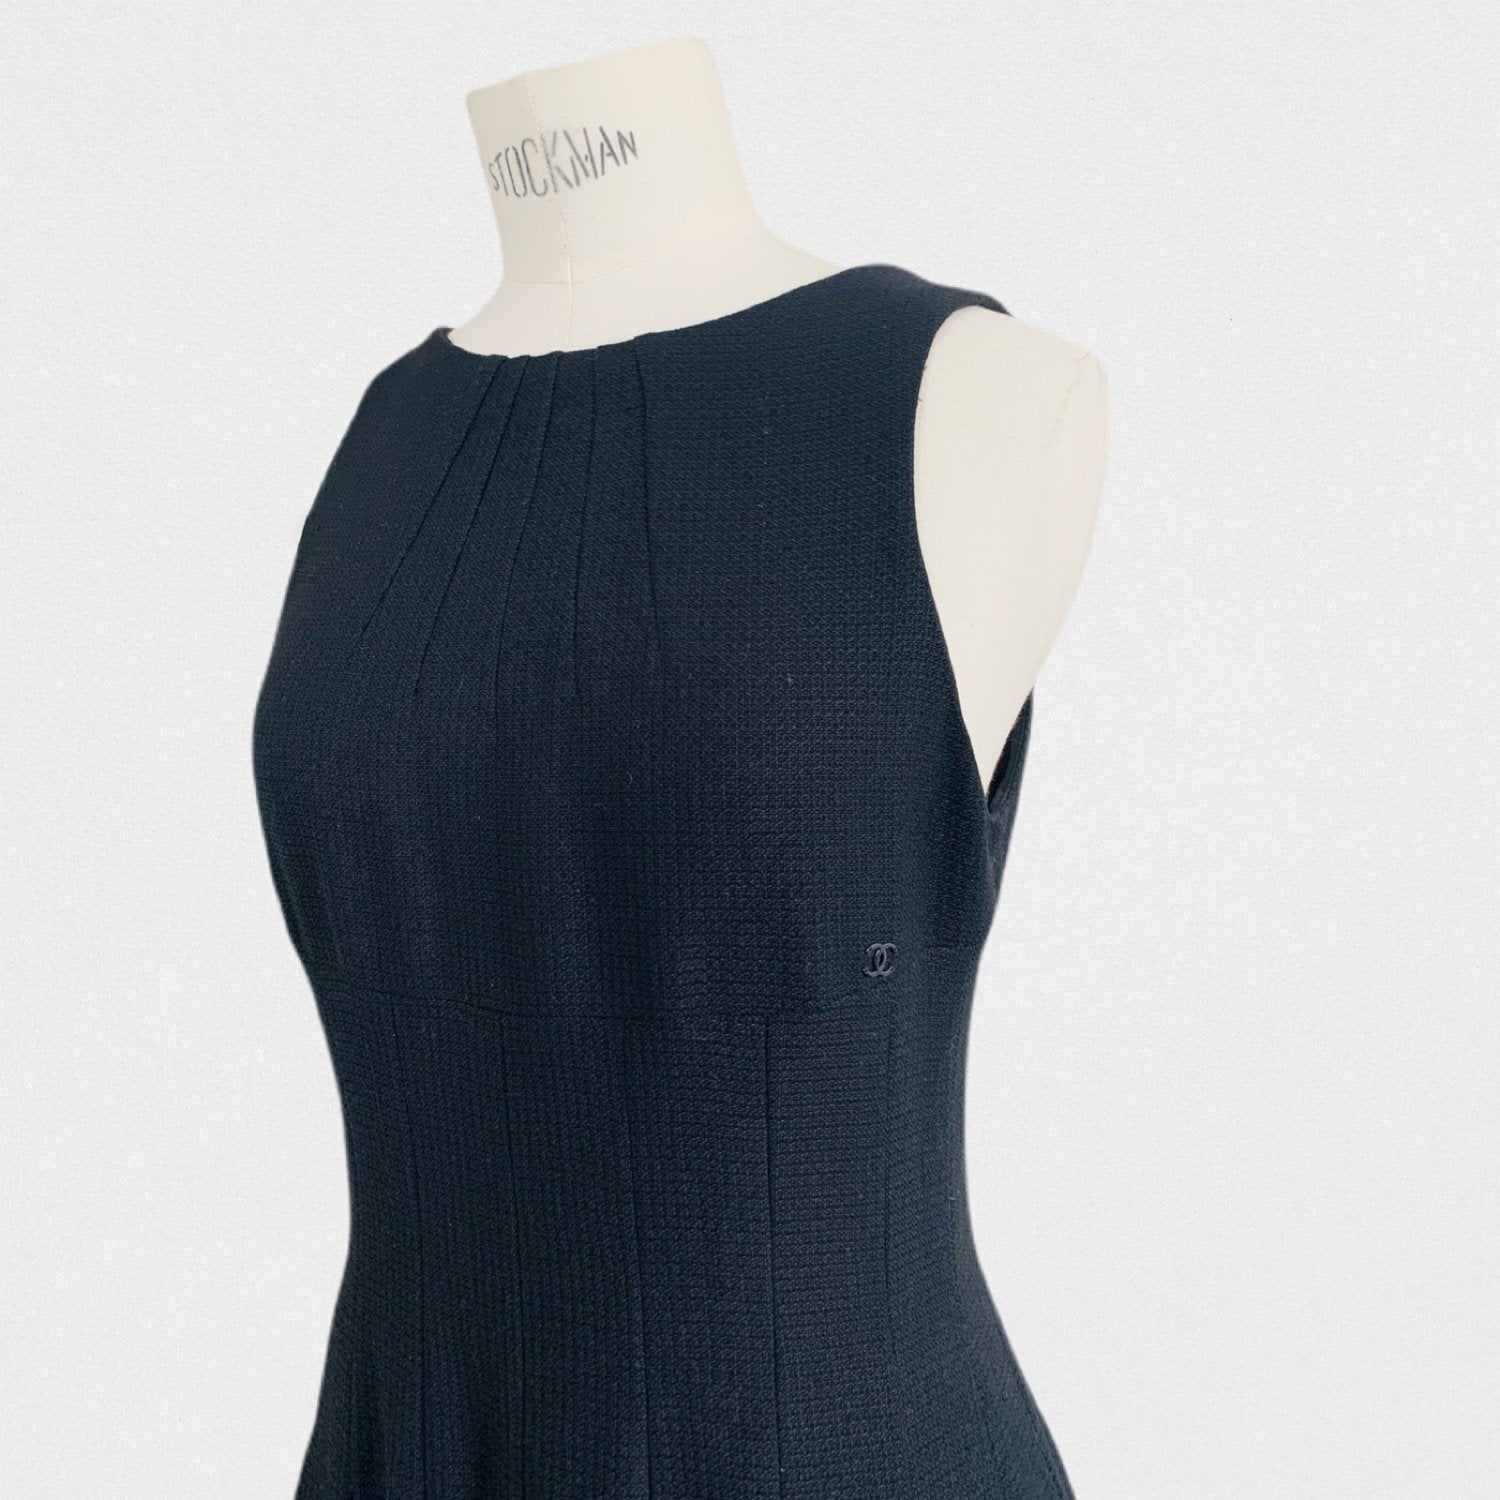 Lysis vintage Chanel golf dress - M - 2012